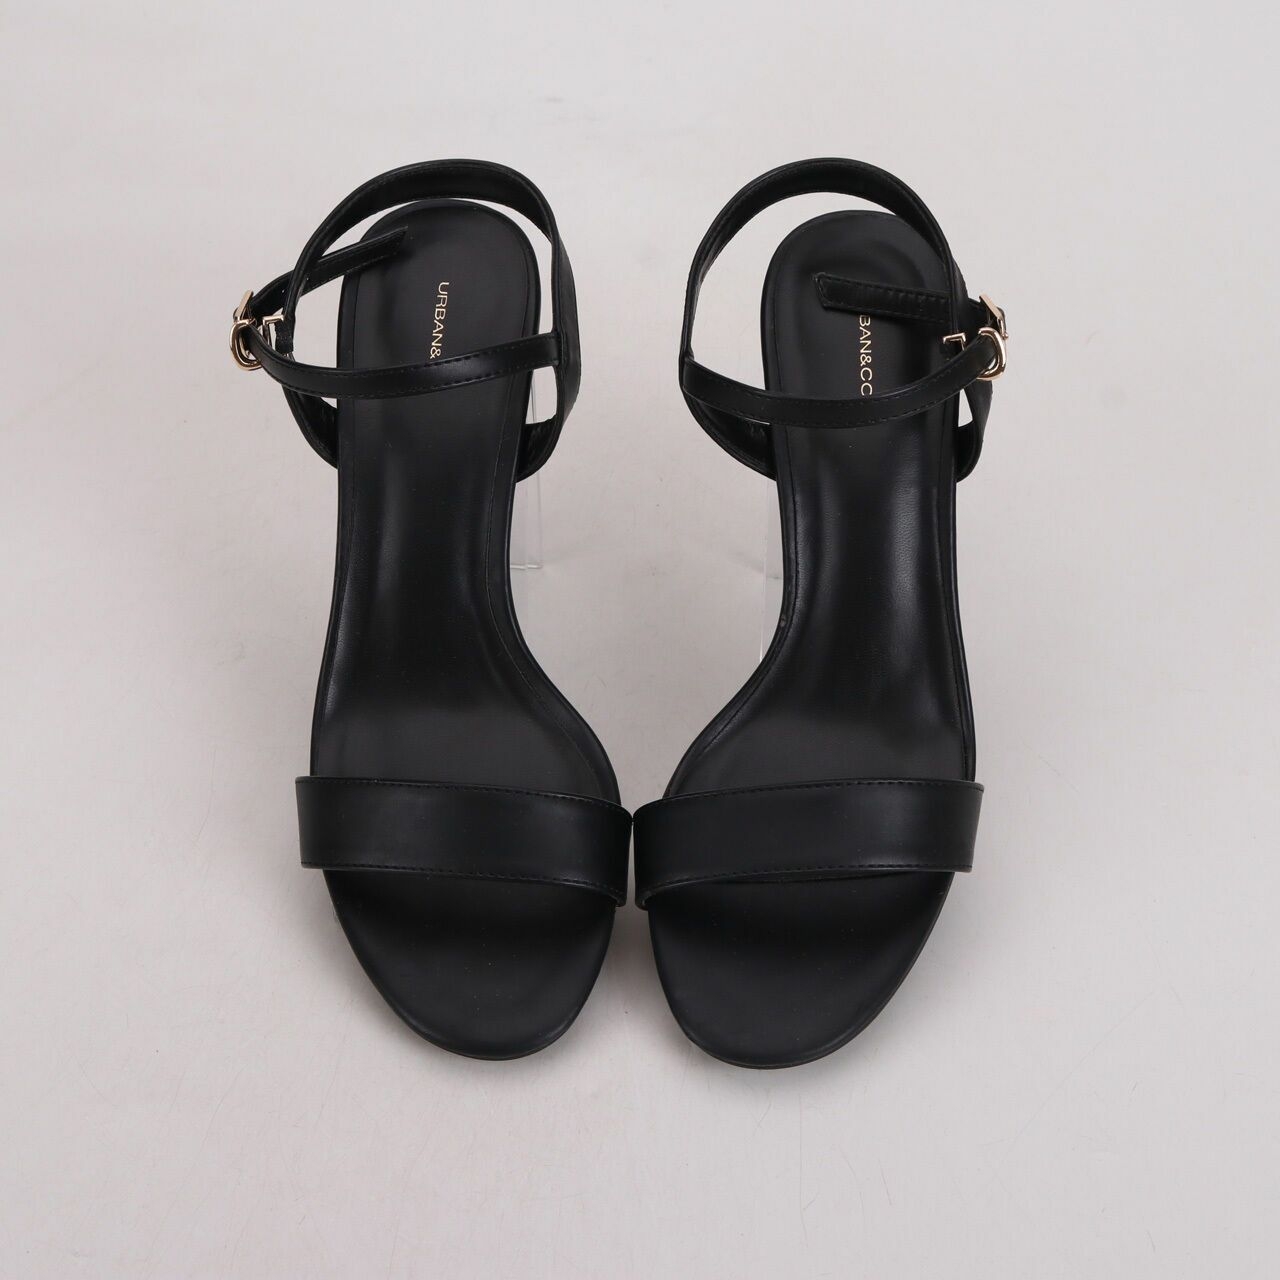 Urban & Co Brile Black Heels